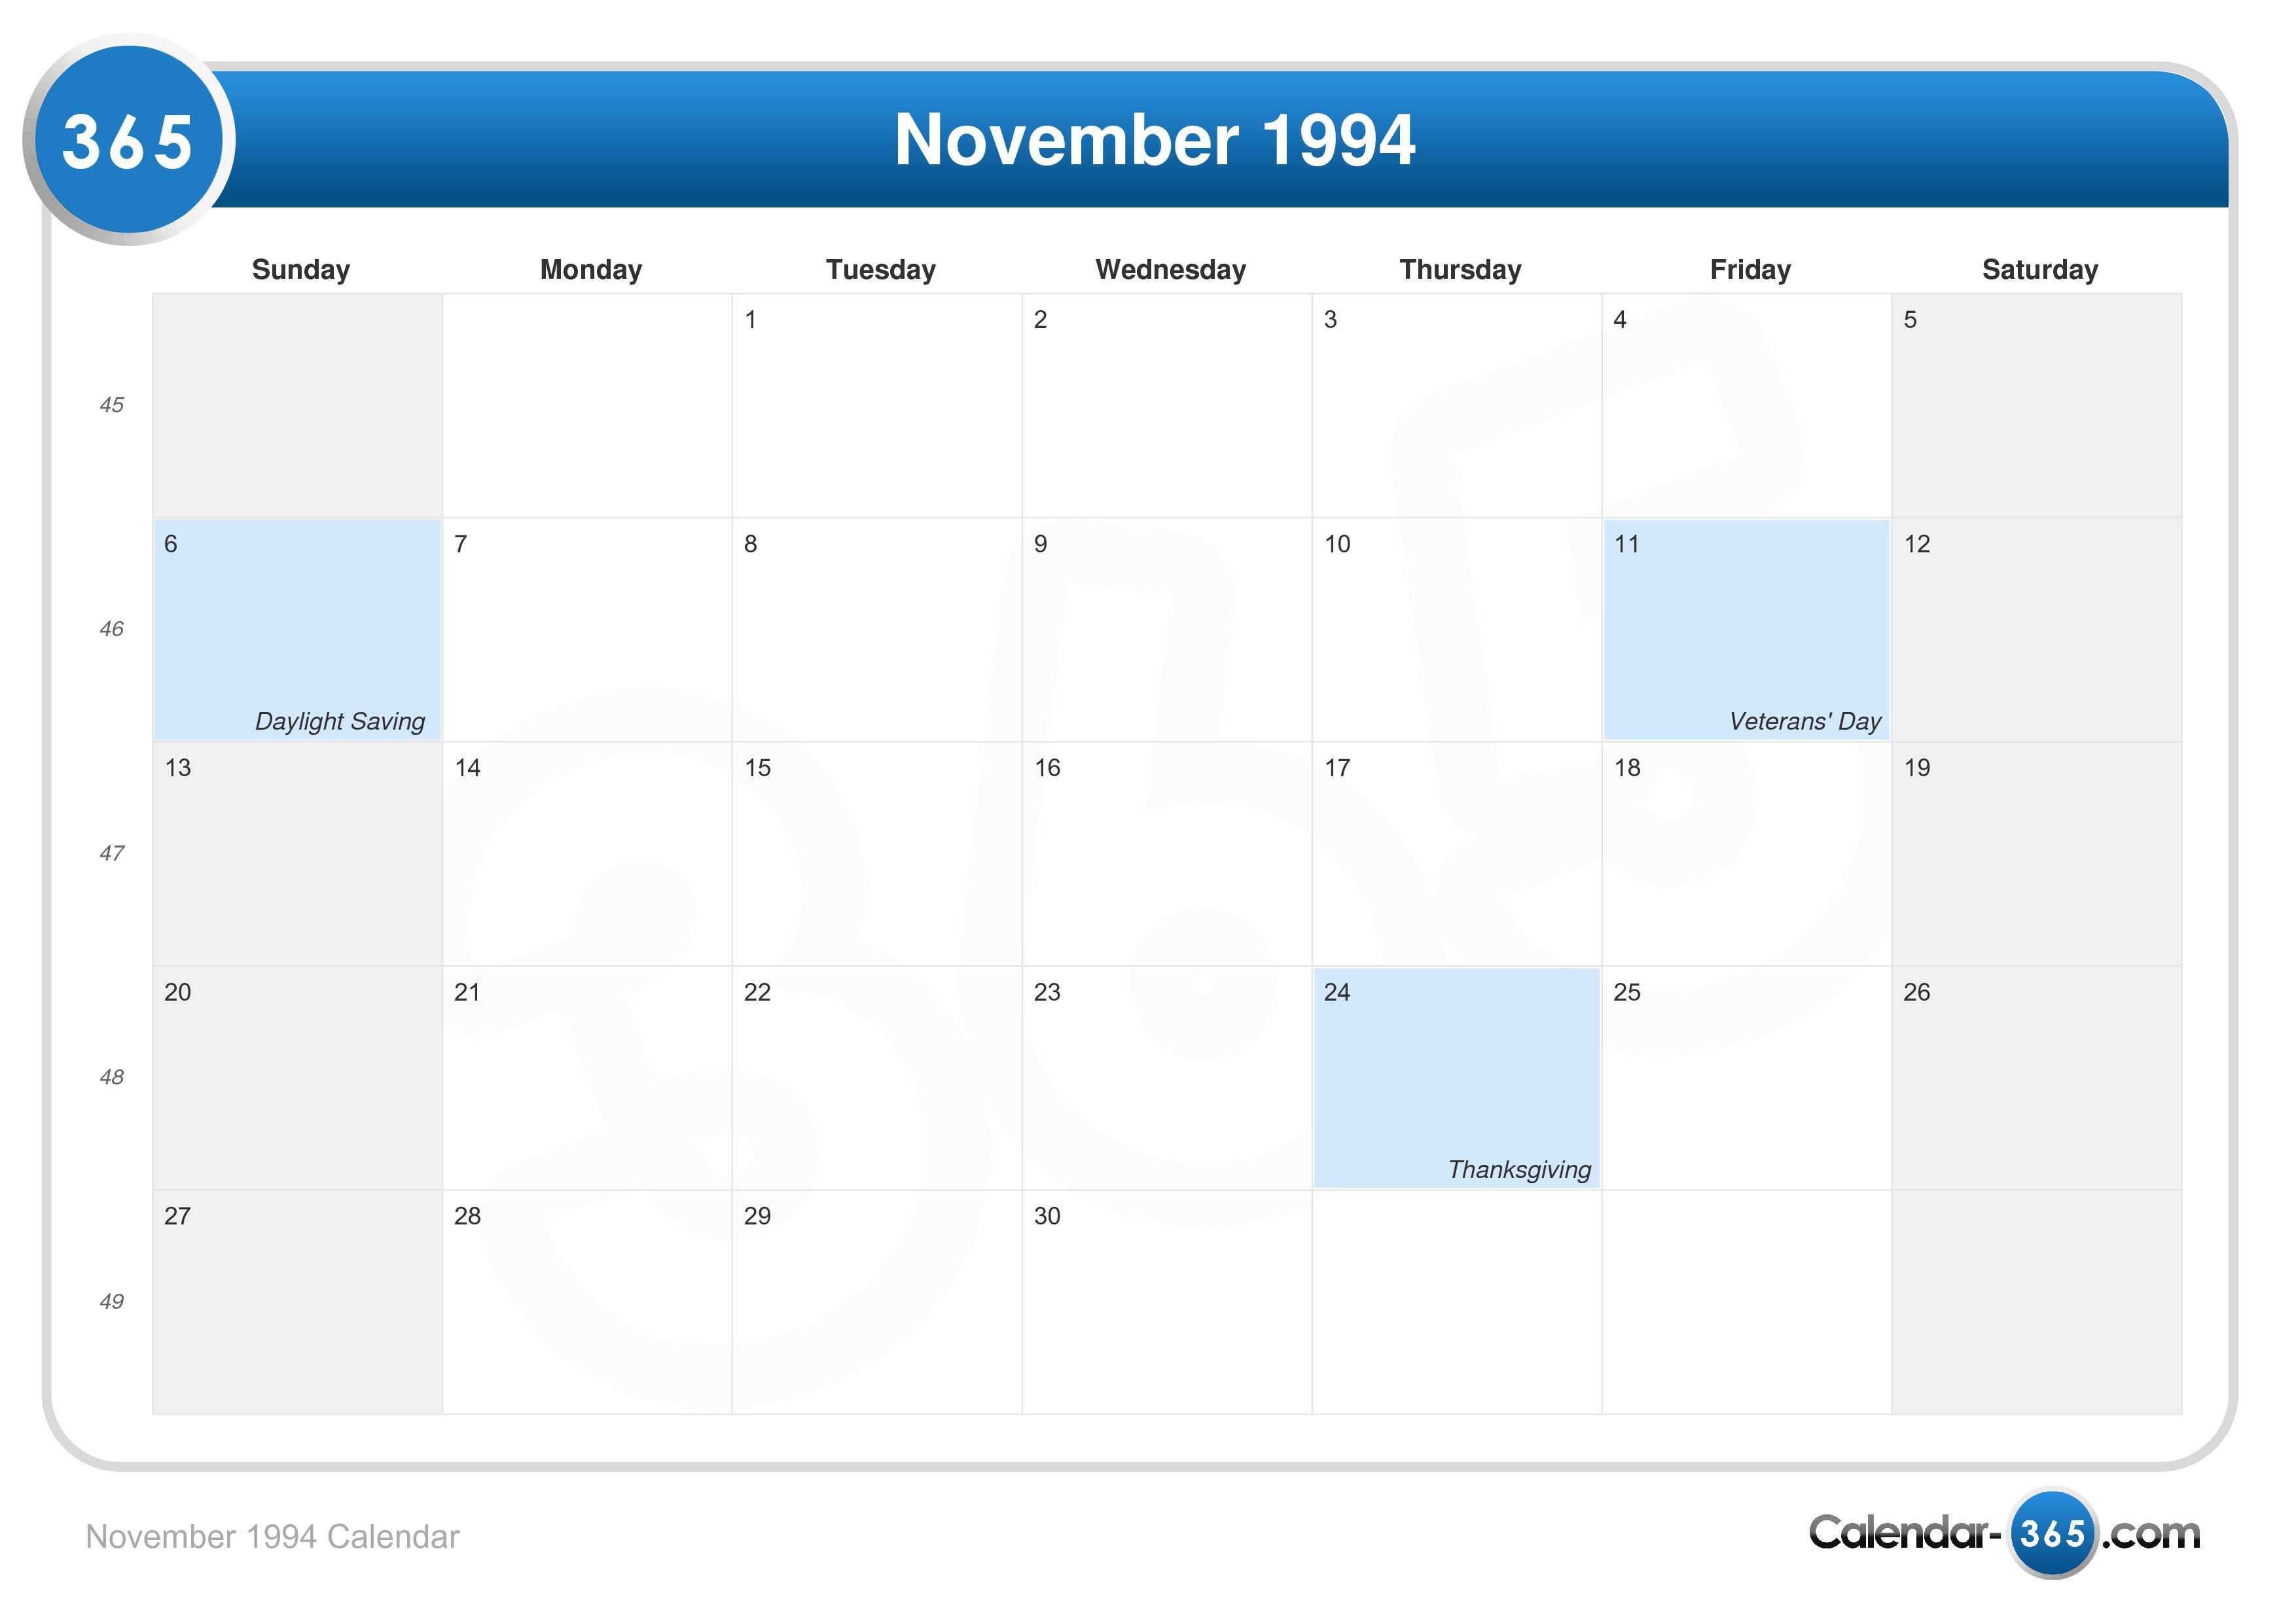 November 1994 Calendar